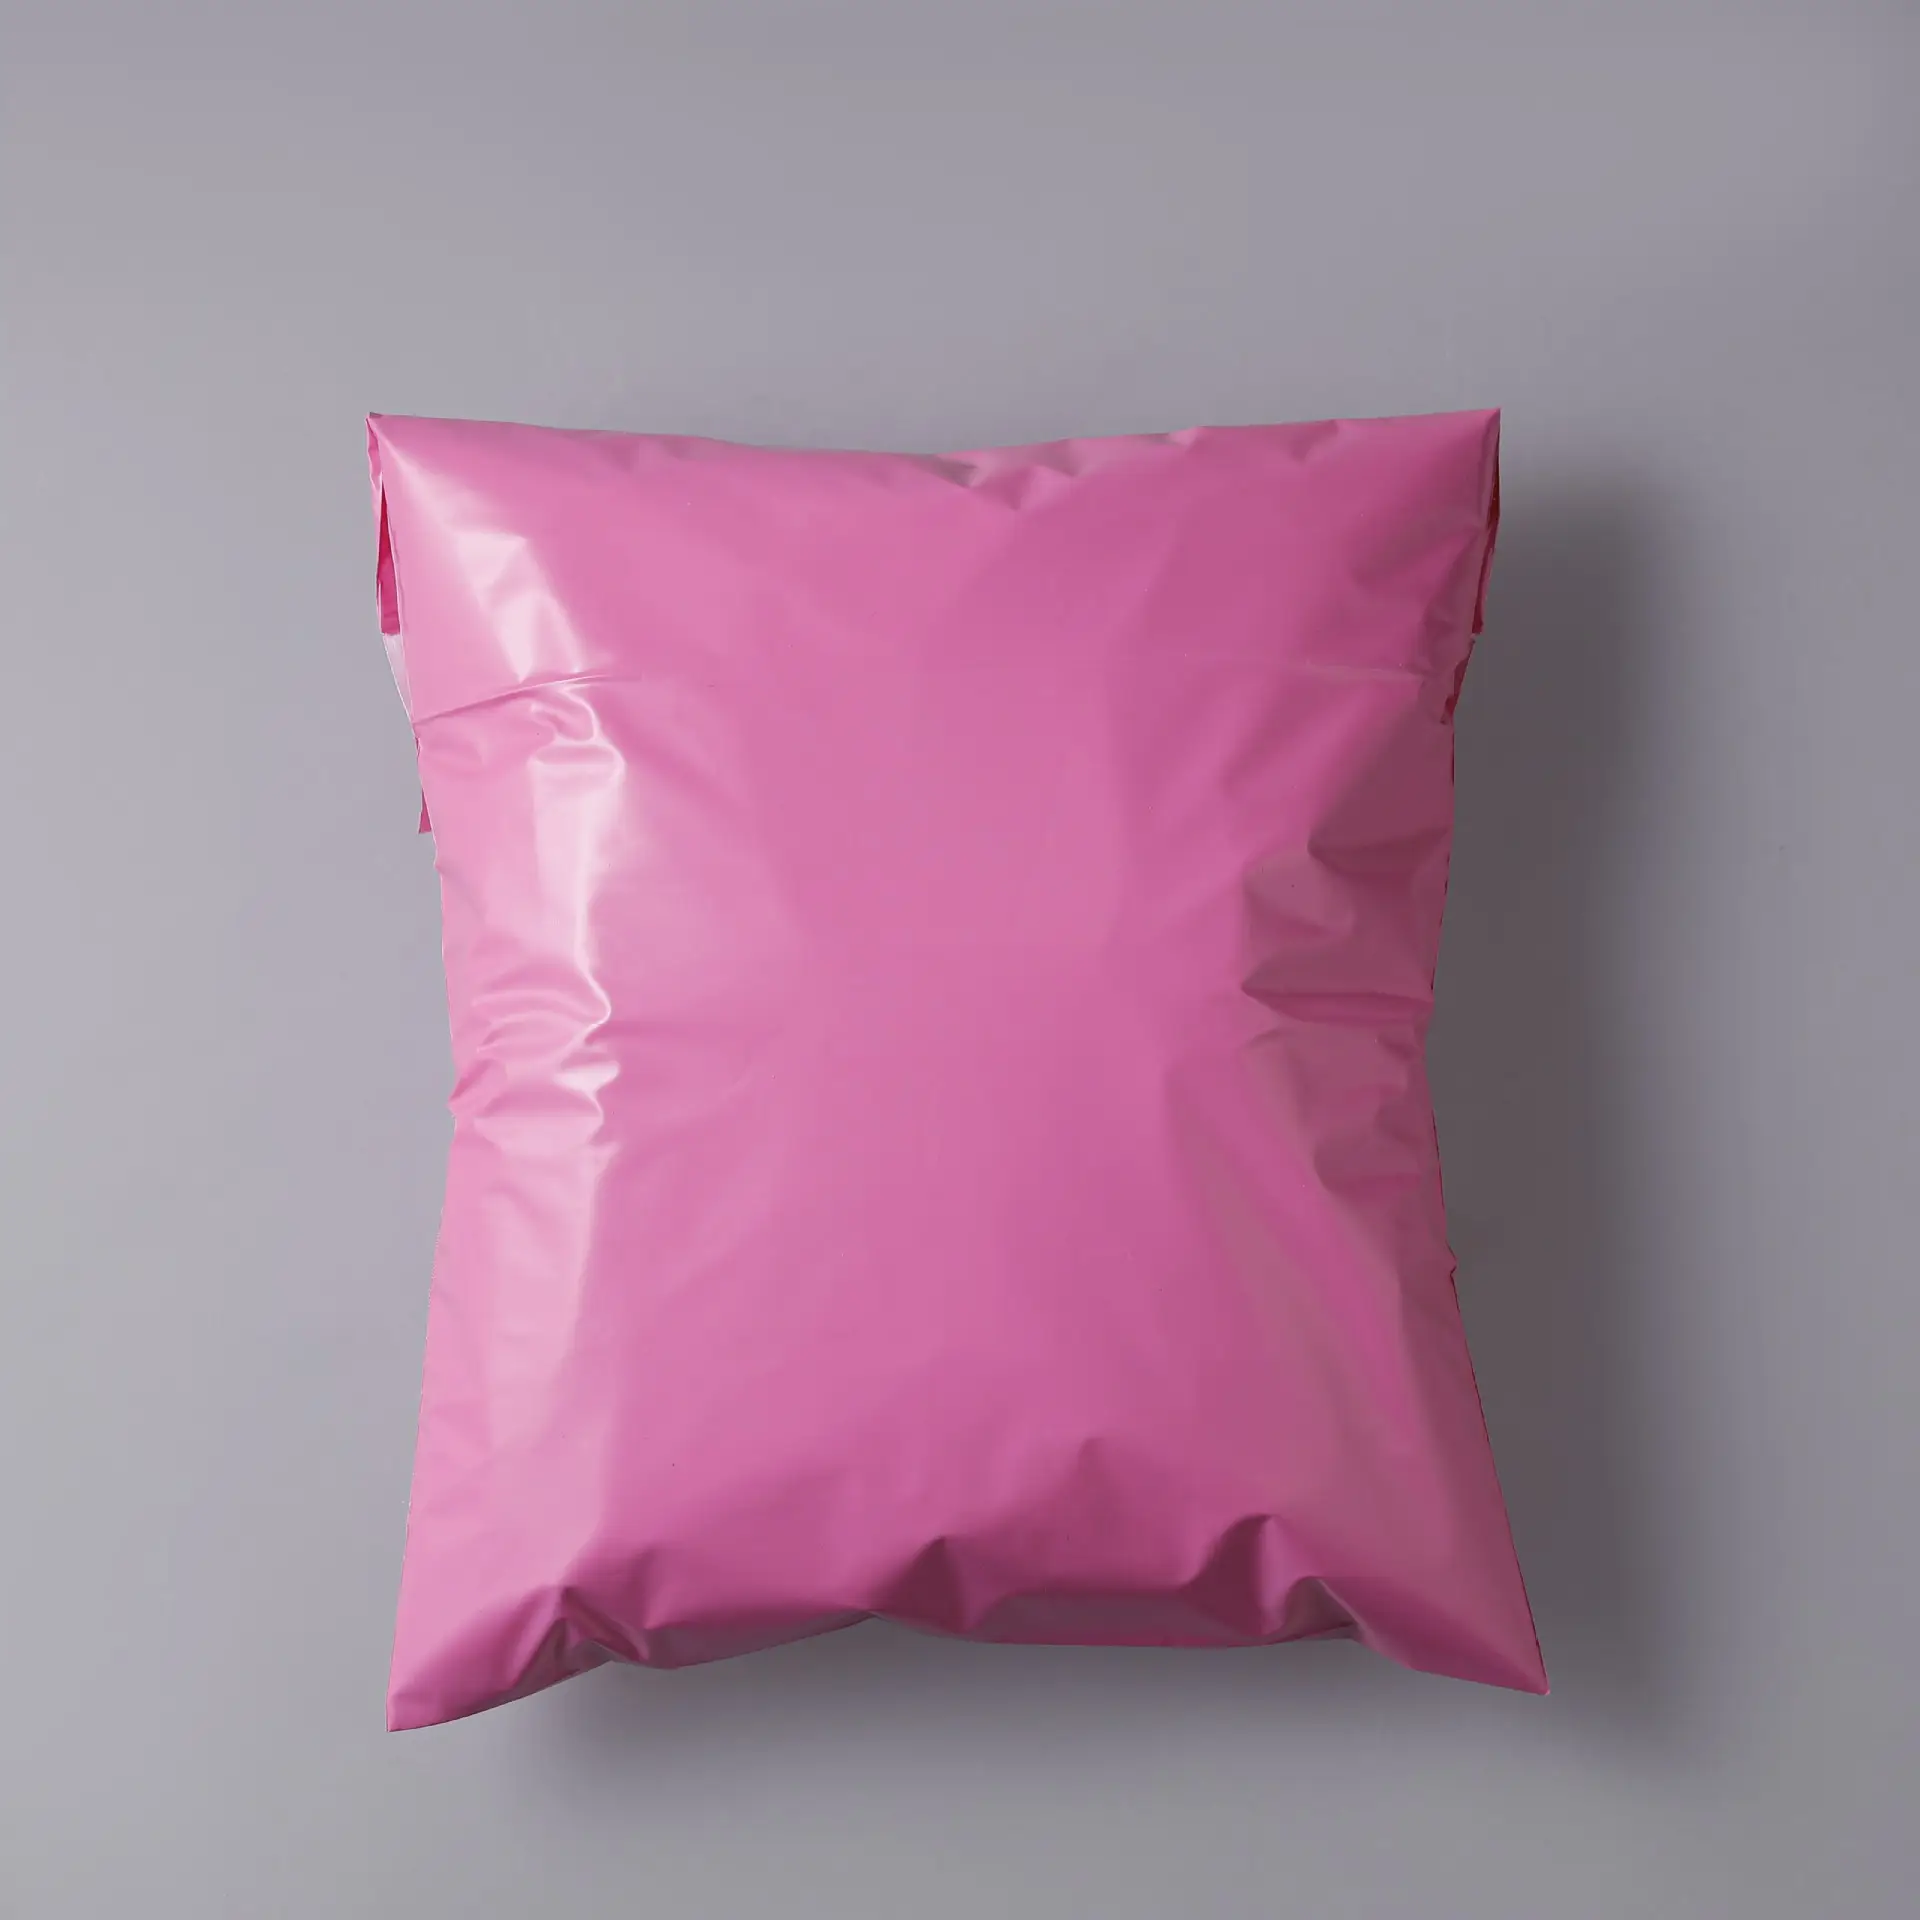 Logo kustom PolyMailer dicetak poli kemasan pakaian pengiriman amplop plastik pengiriman kurir merah muda surat poli